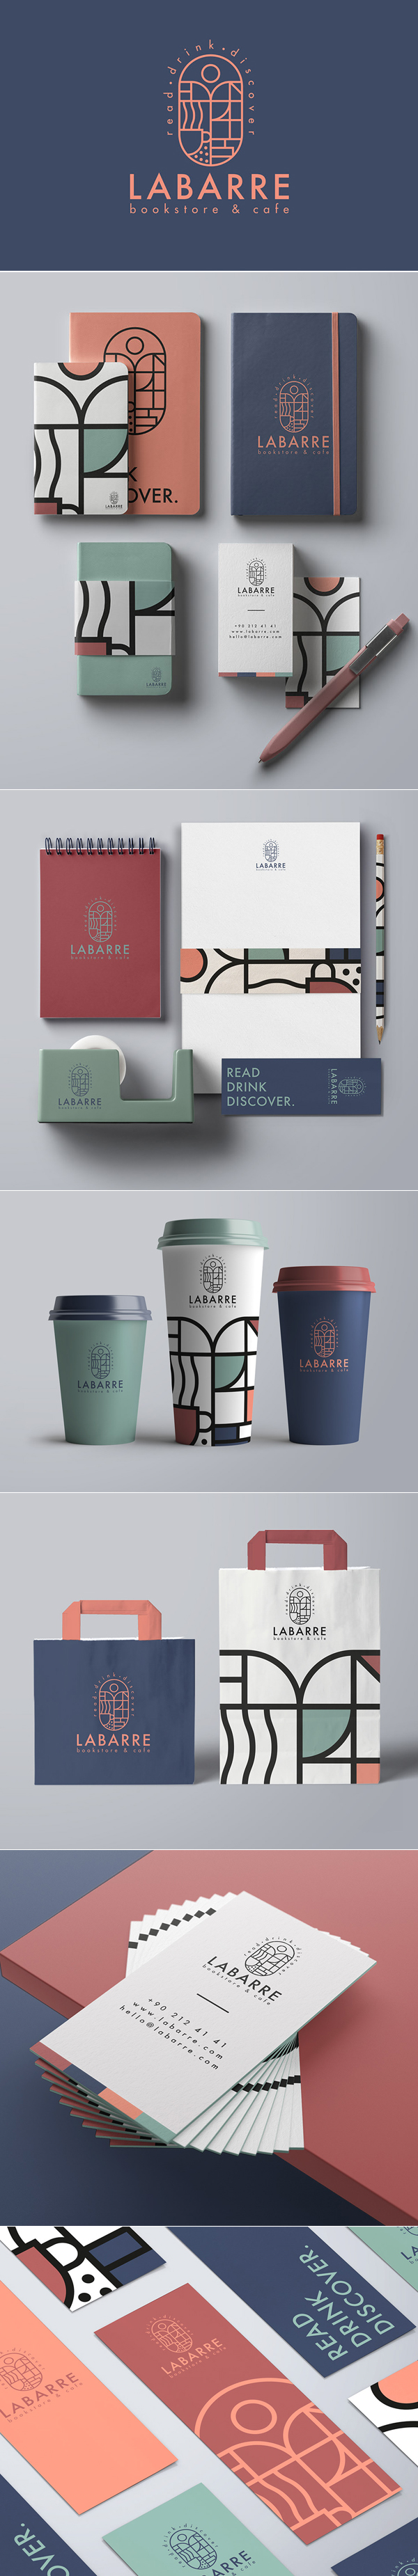 Marque: Labarre Bookstore & Cafe Brand Design par ONTO Design Studio